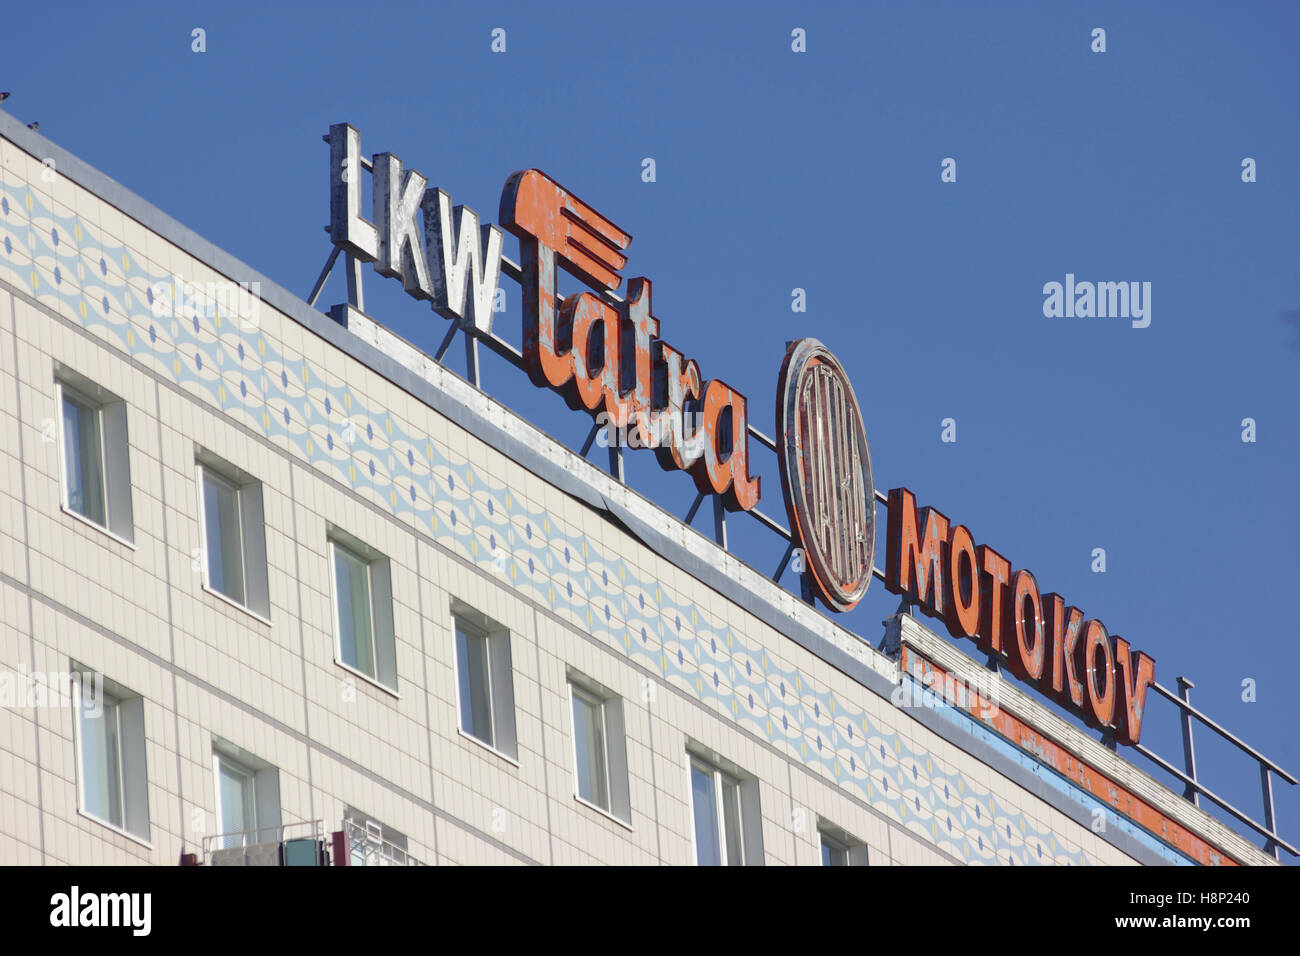 LKW Mokokov Tartra segno, DDR era Plattenbau su Karl-Marx-Allee, Berlino Foto Stock